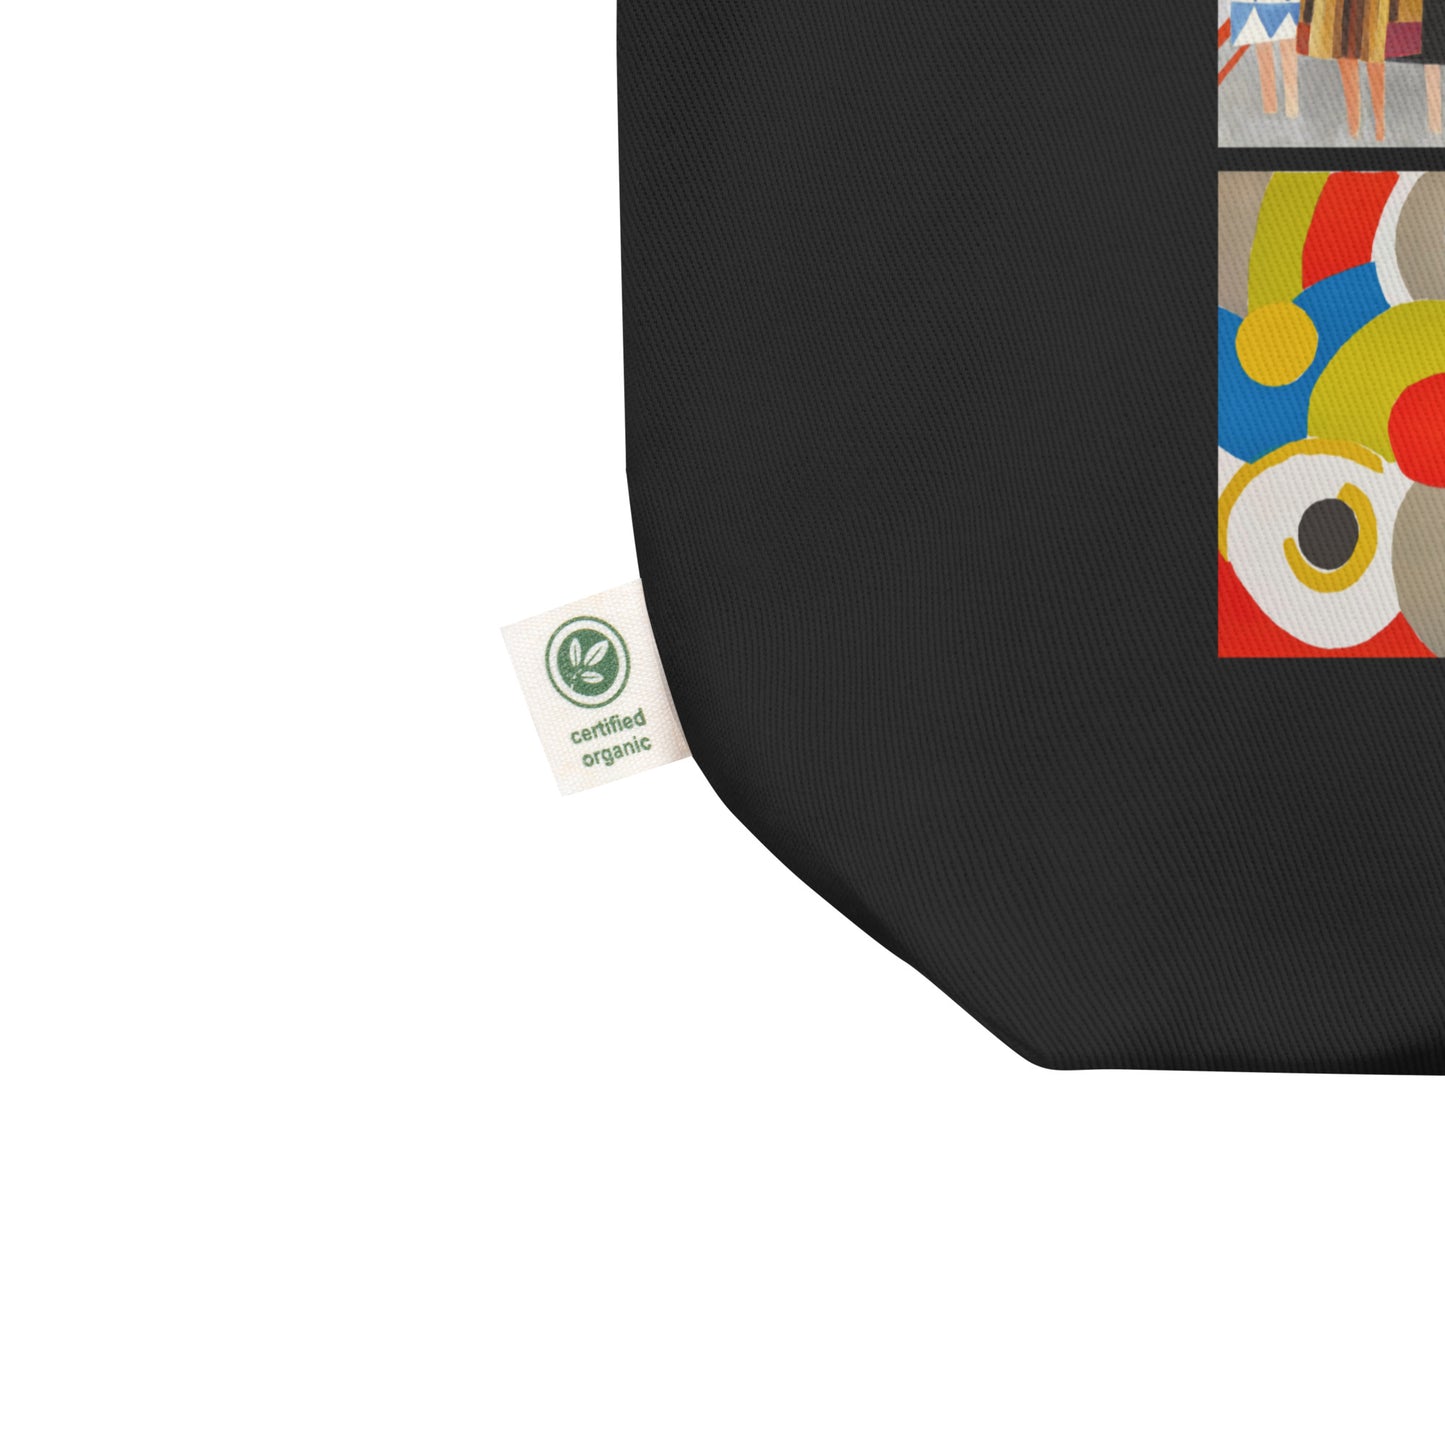 Sonia Delaunay printed Eco Tote Bag in black